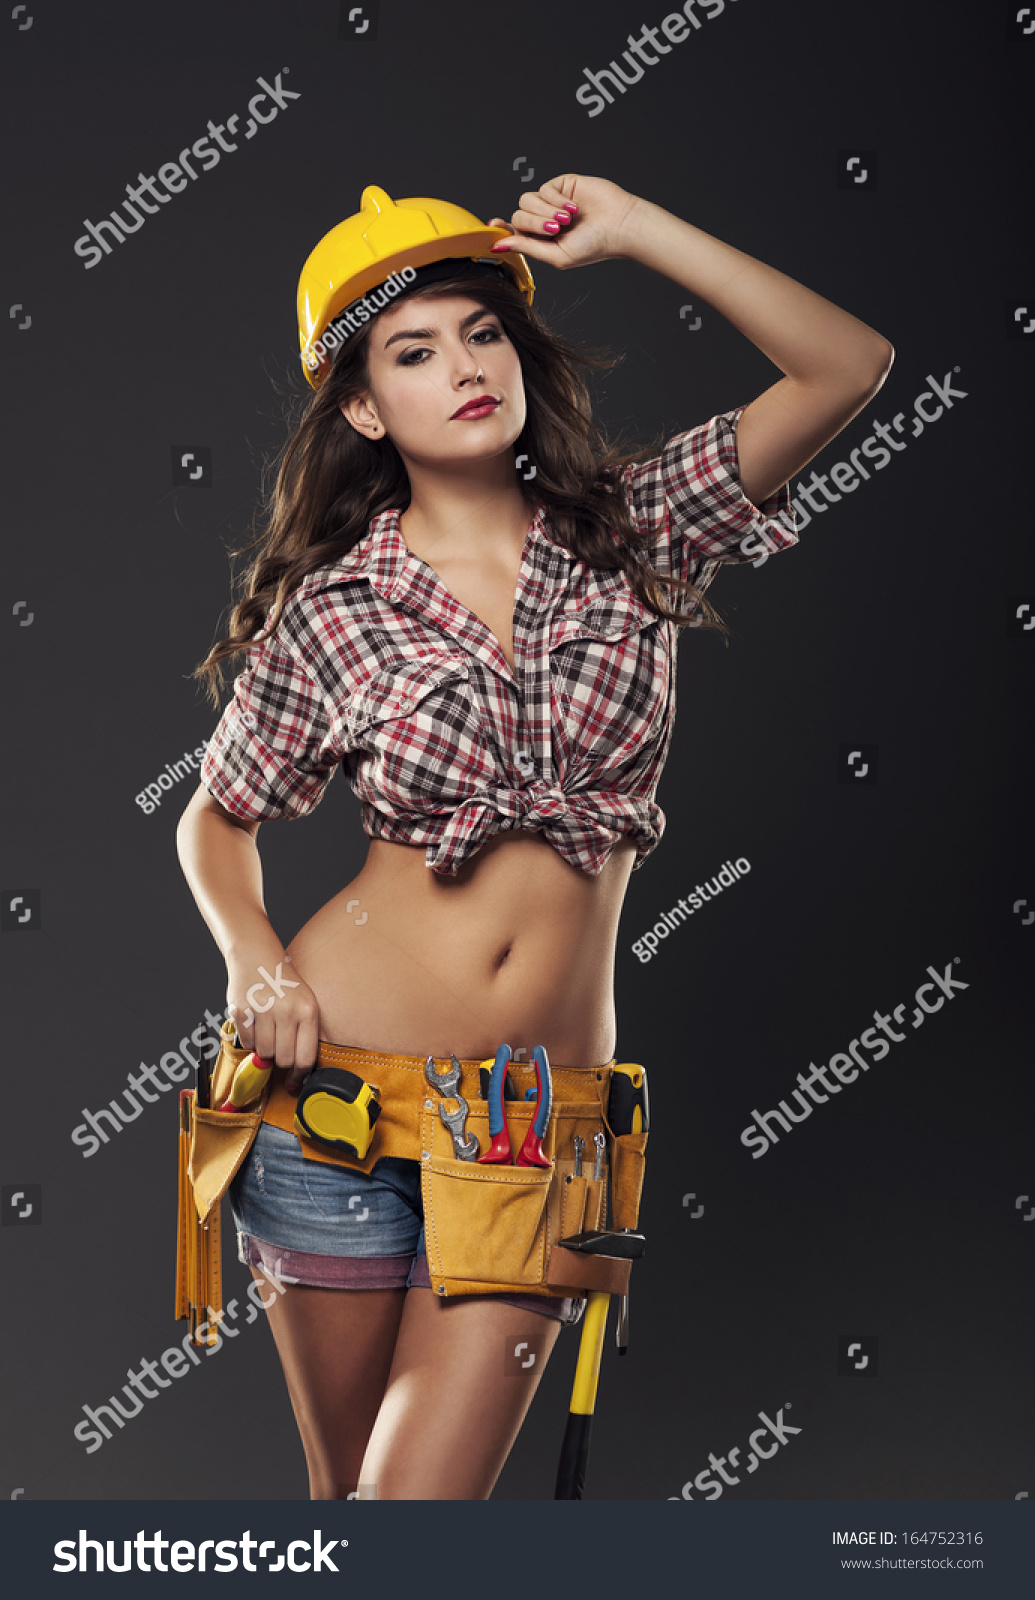 caroline utama share hot female construction worker photos